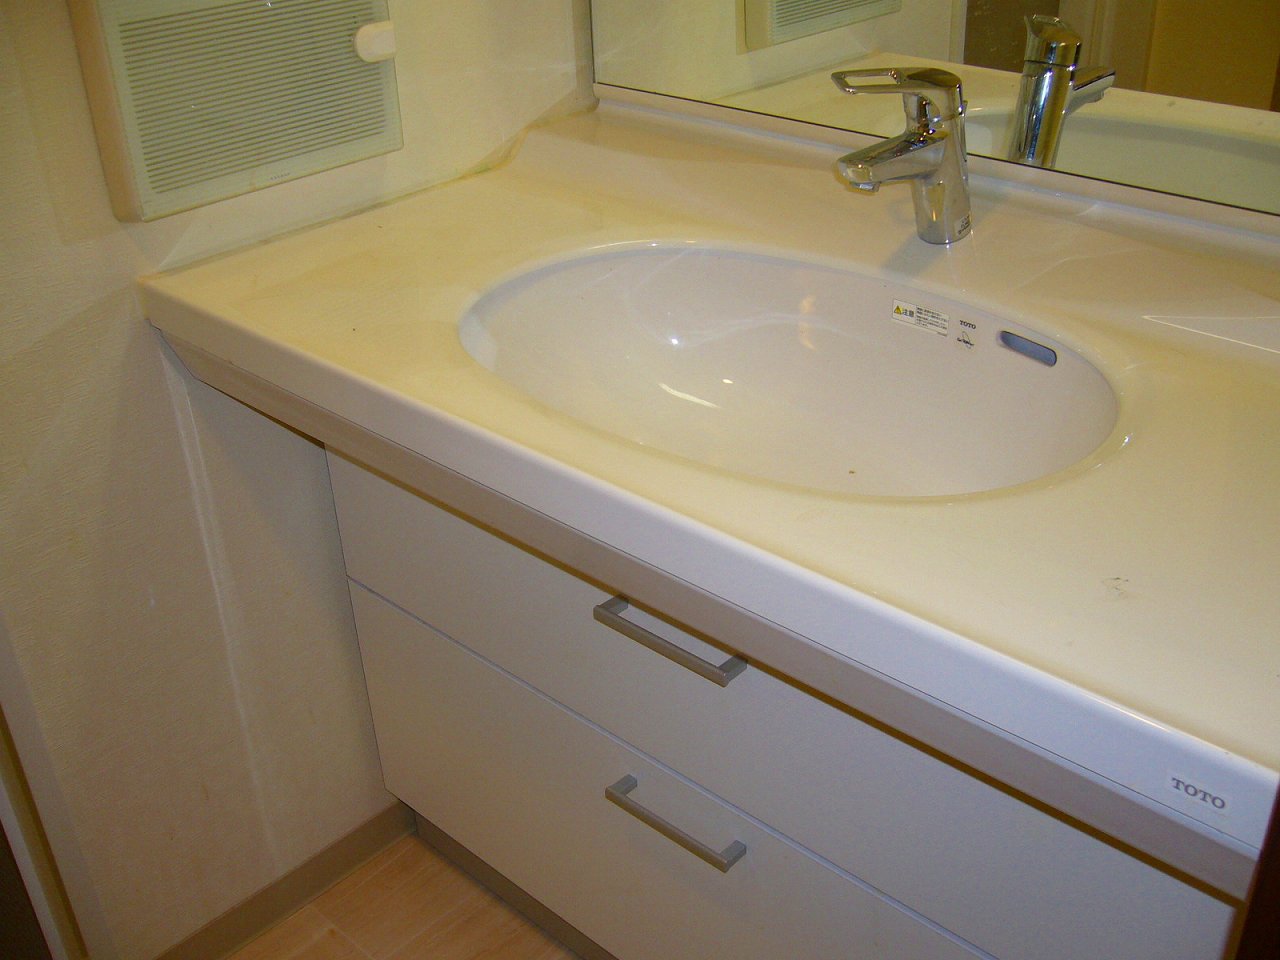 Washroom. This basin sink